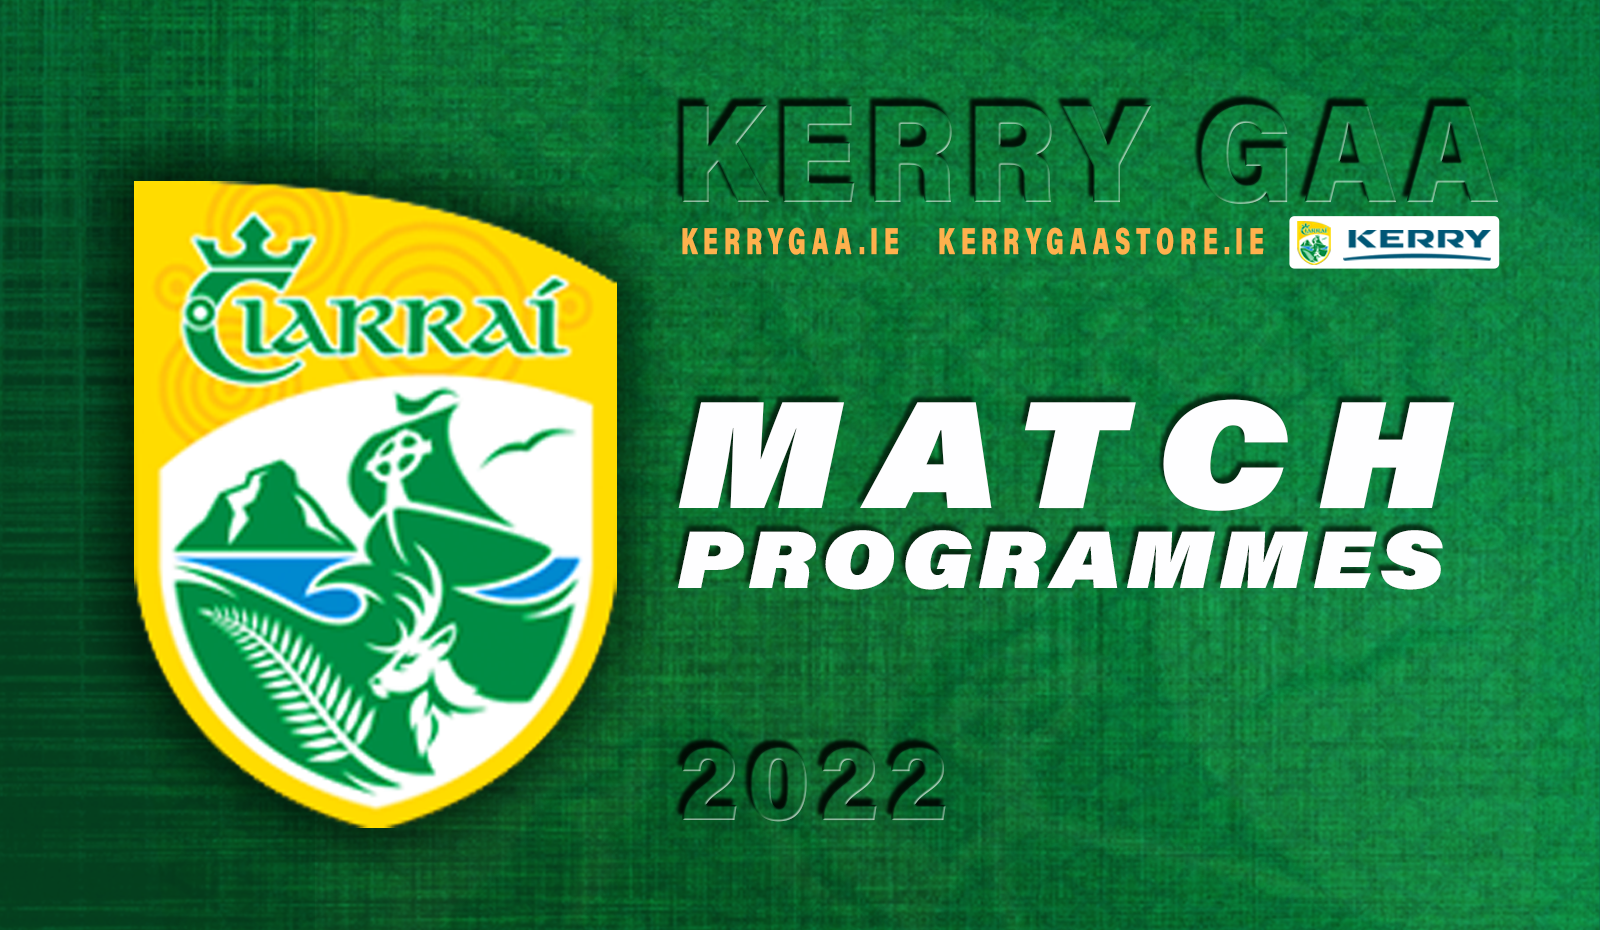 Kerry Petroleum Club Championships – Match Programmes for Saturday